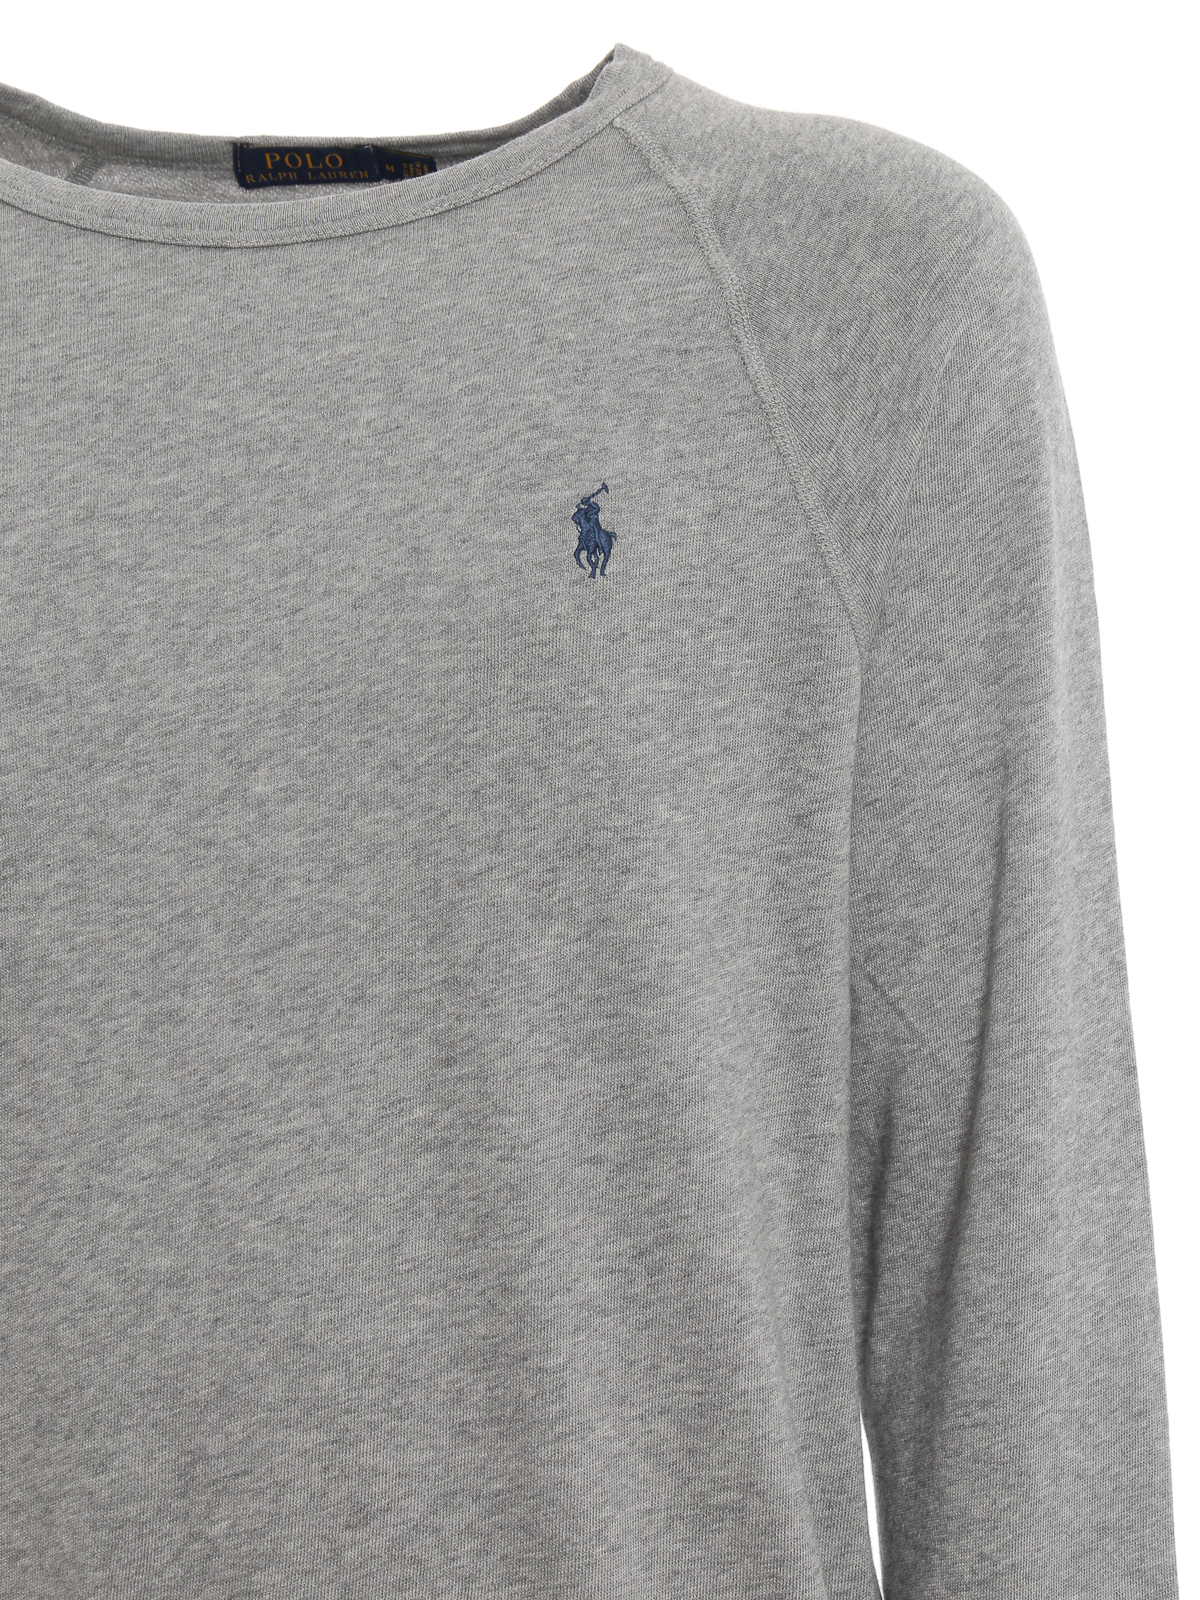 Sweatshirts & Sweaters Polo Ralph Lauren - Melange grey cotton sweatshirt -  710644952023